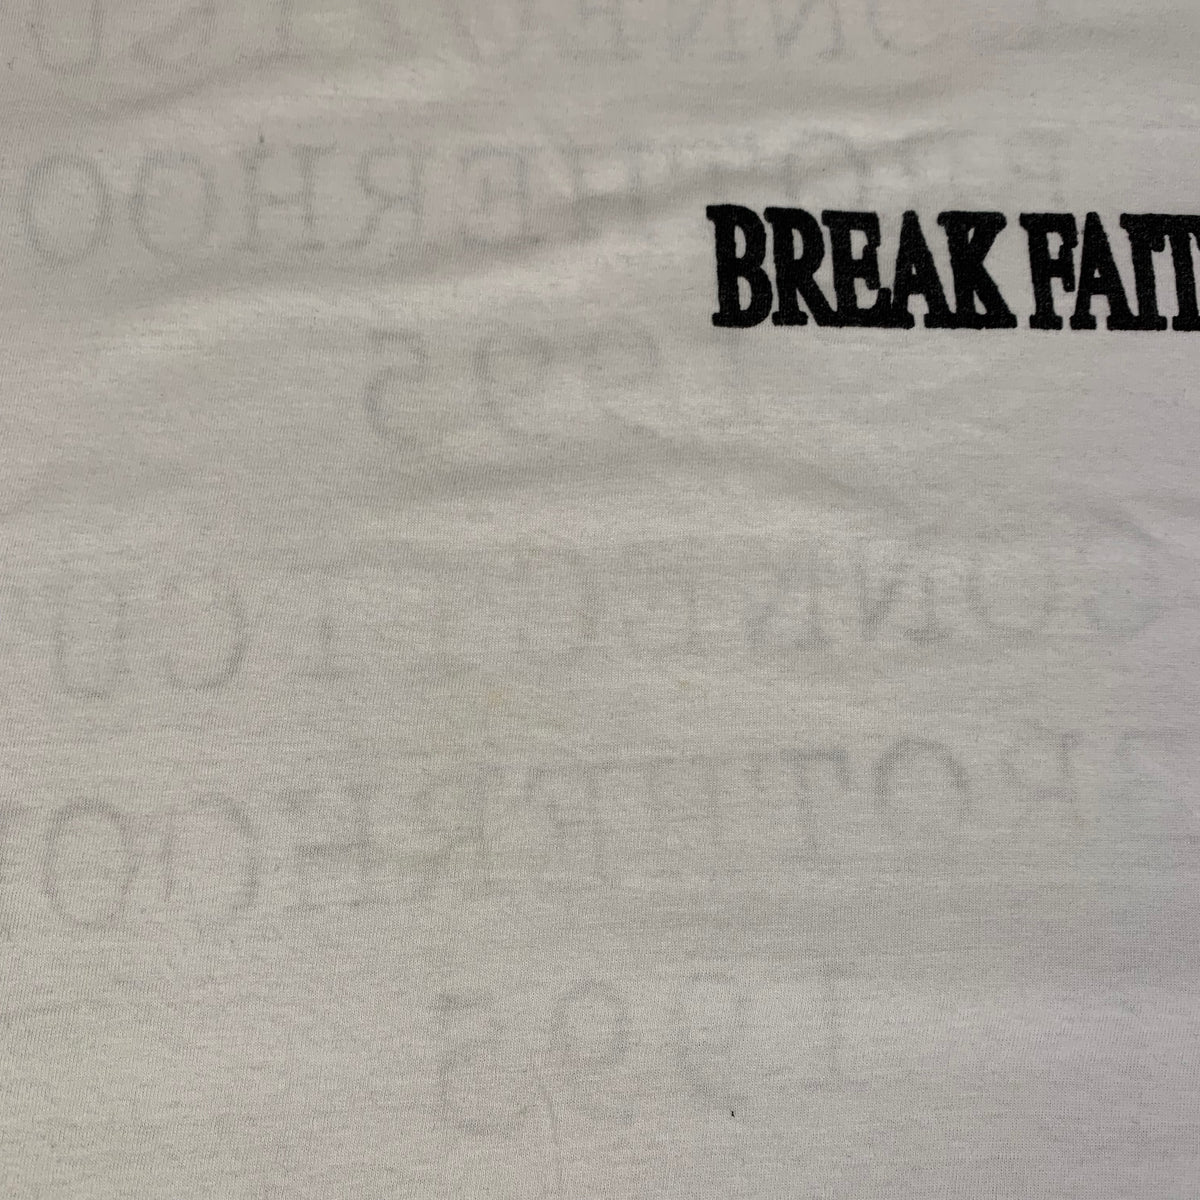 Vintage Break Faith &quot;Connecticut Brotherhood&quot; T-Shirt - jointcustodydc